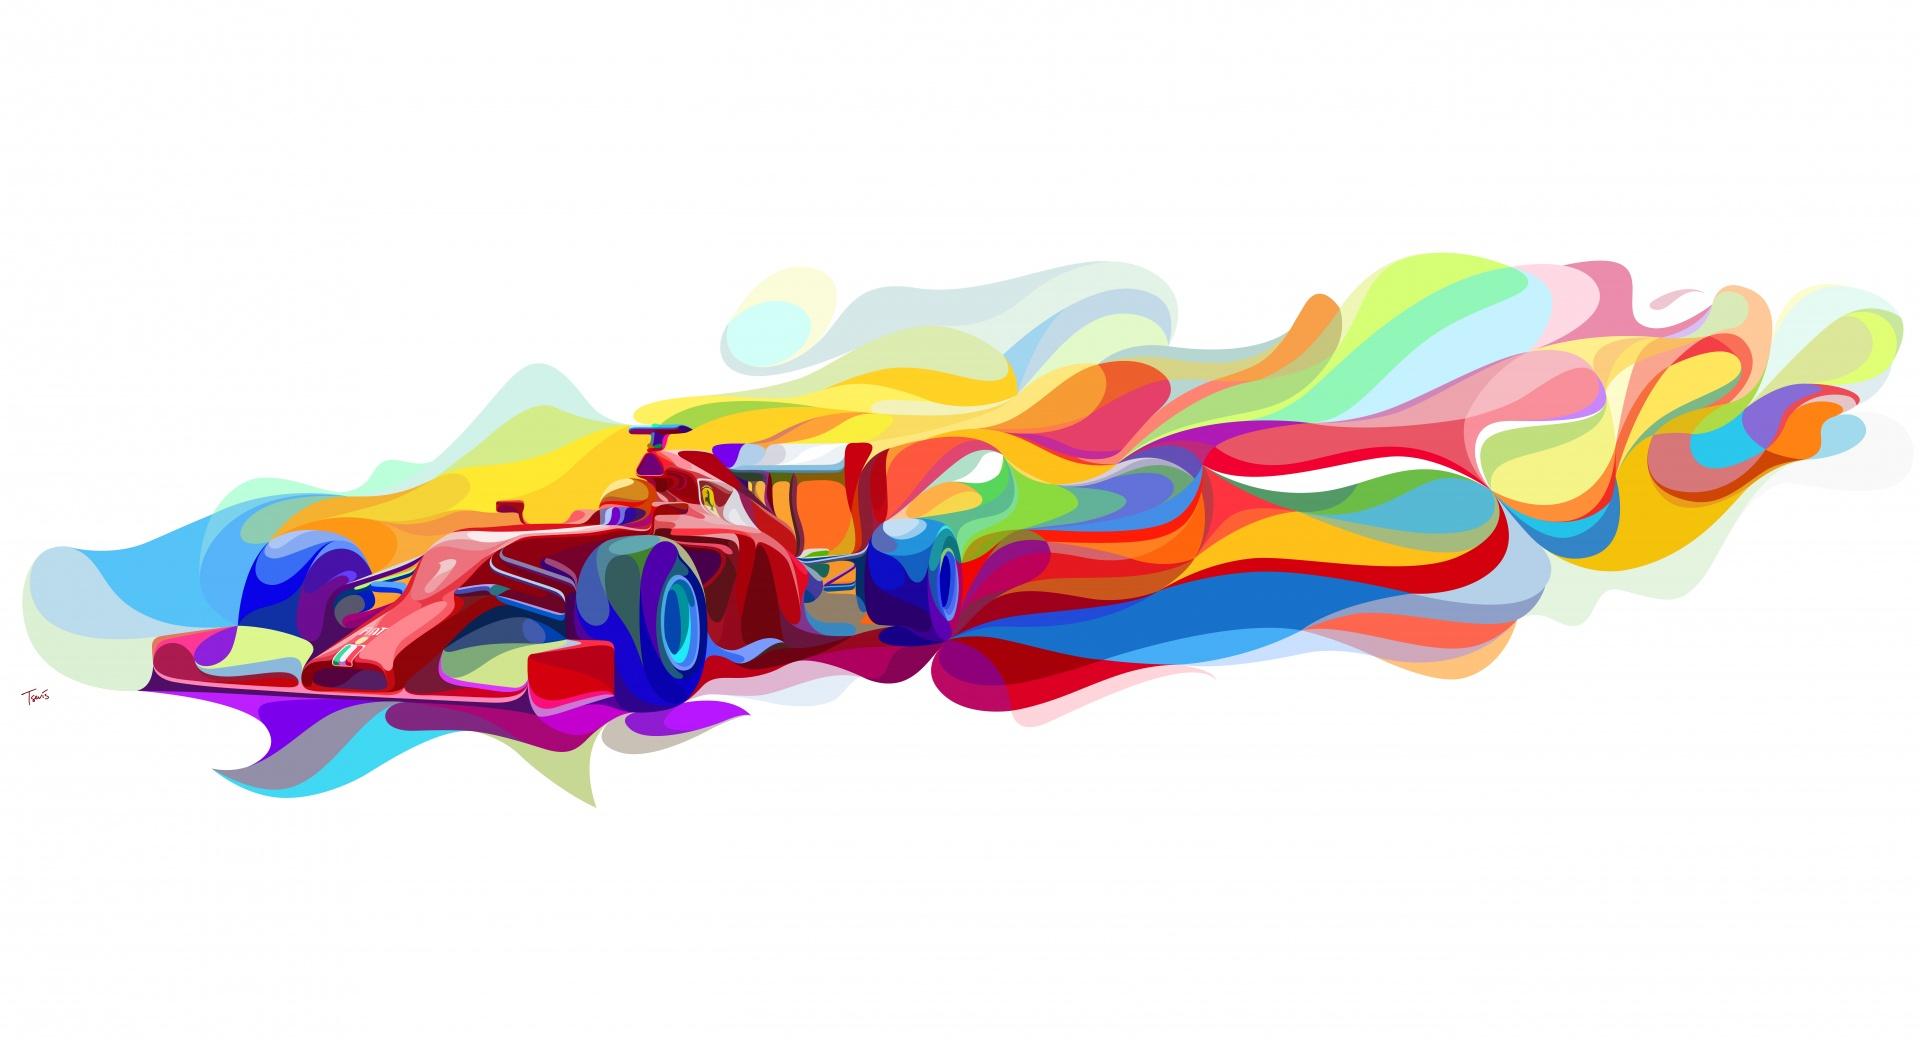 Ferrari Formula One car at 1024 x 1024 iPad size wallpapers HD quality